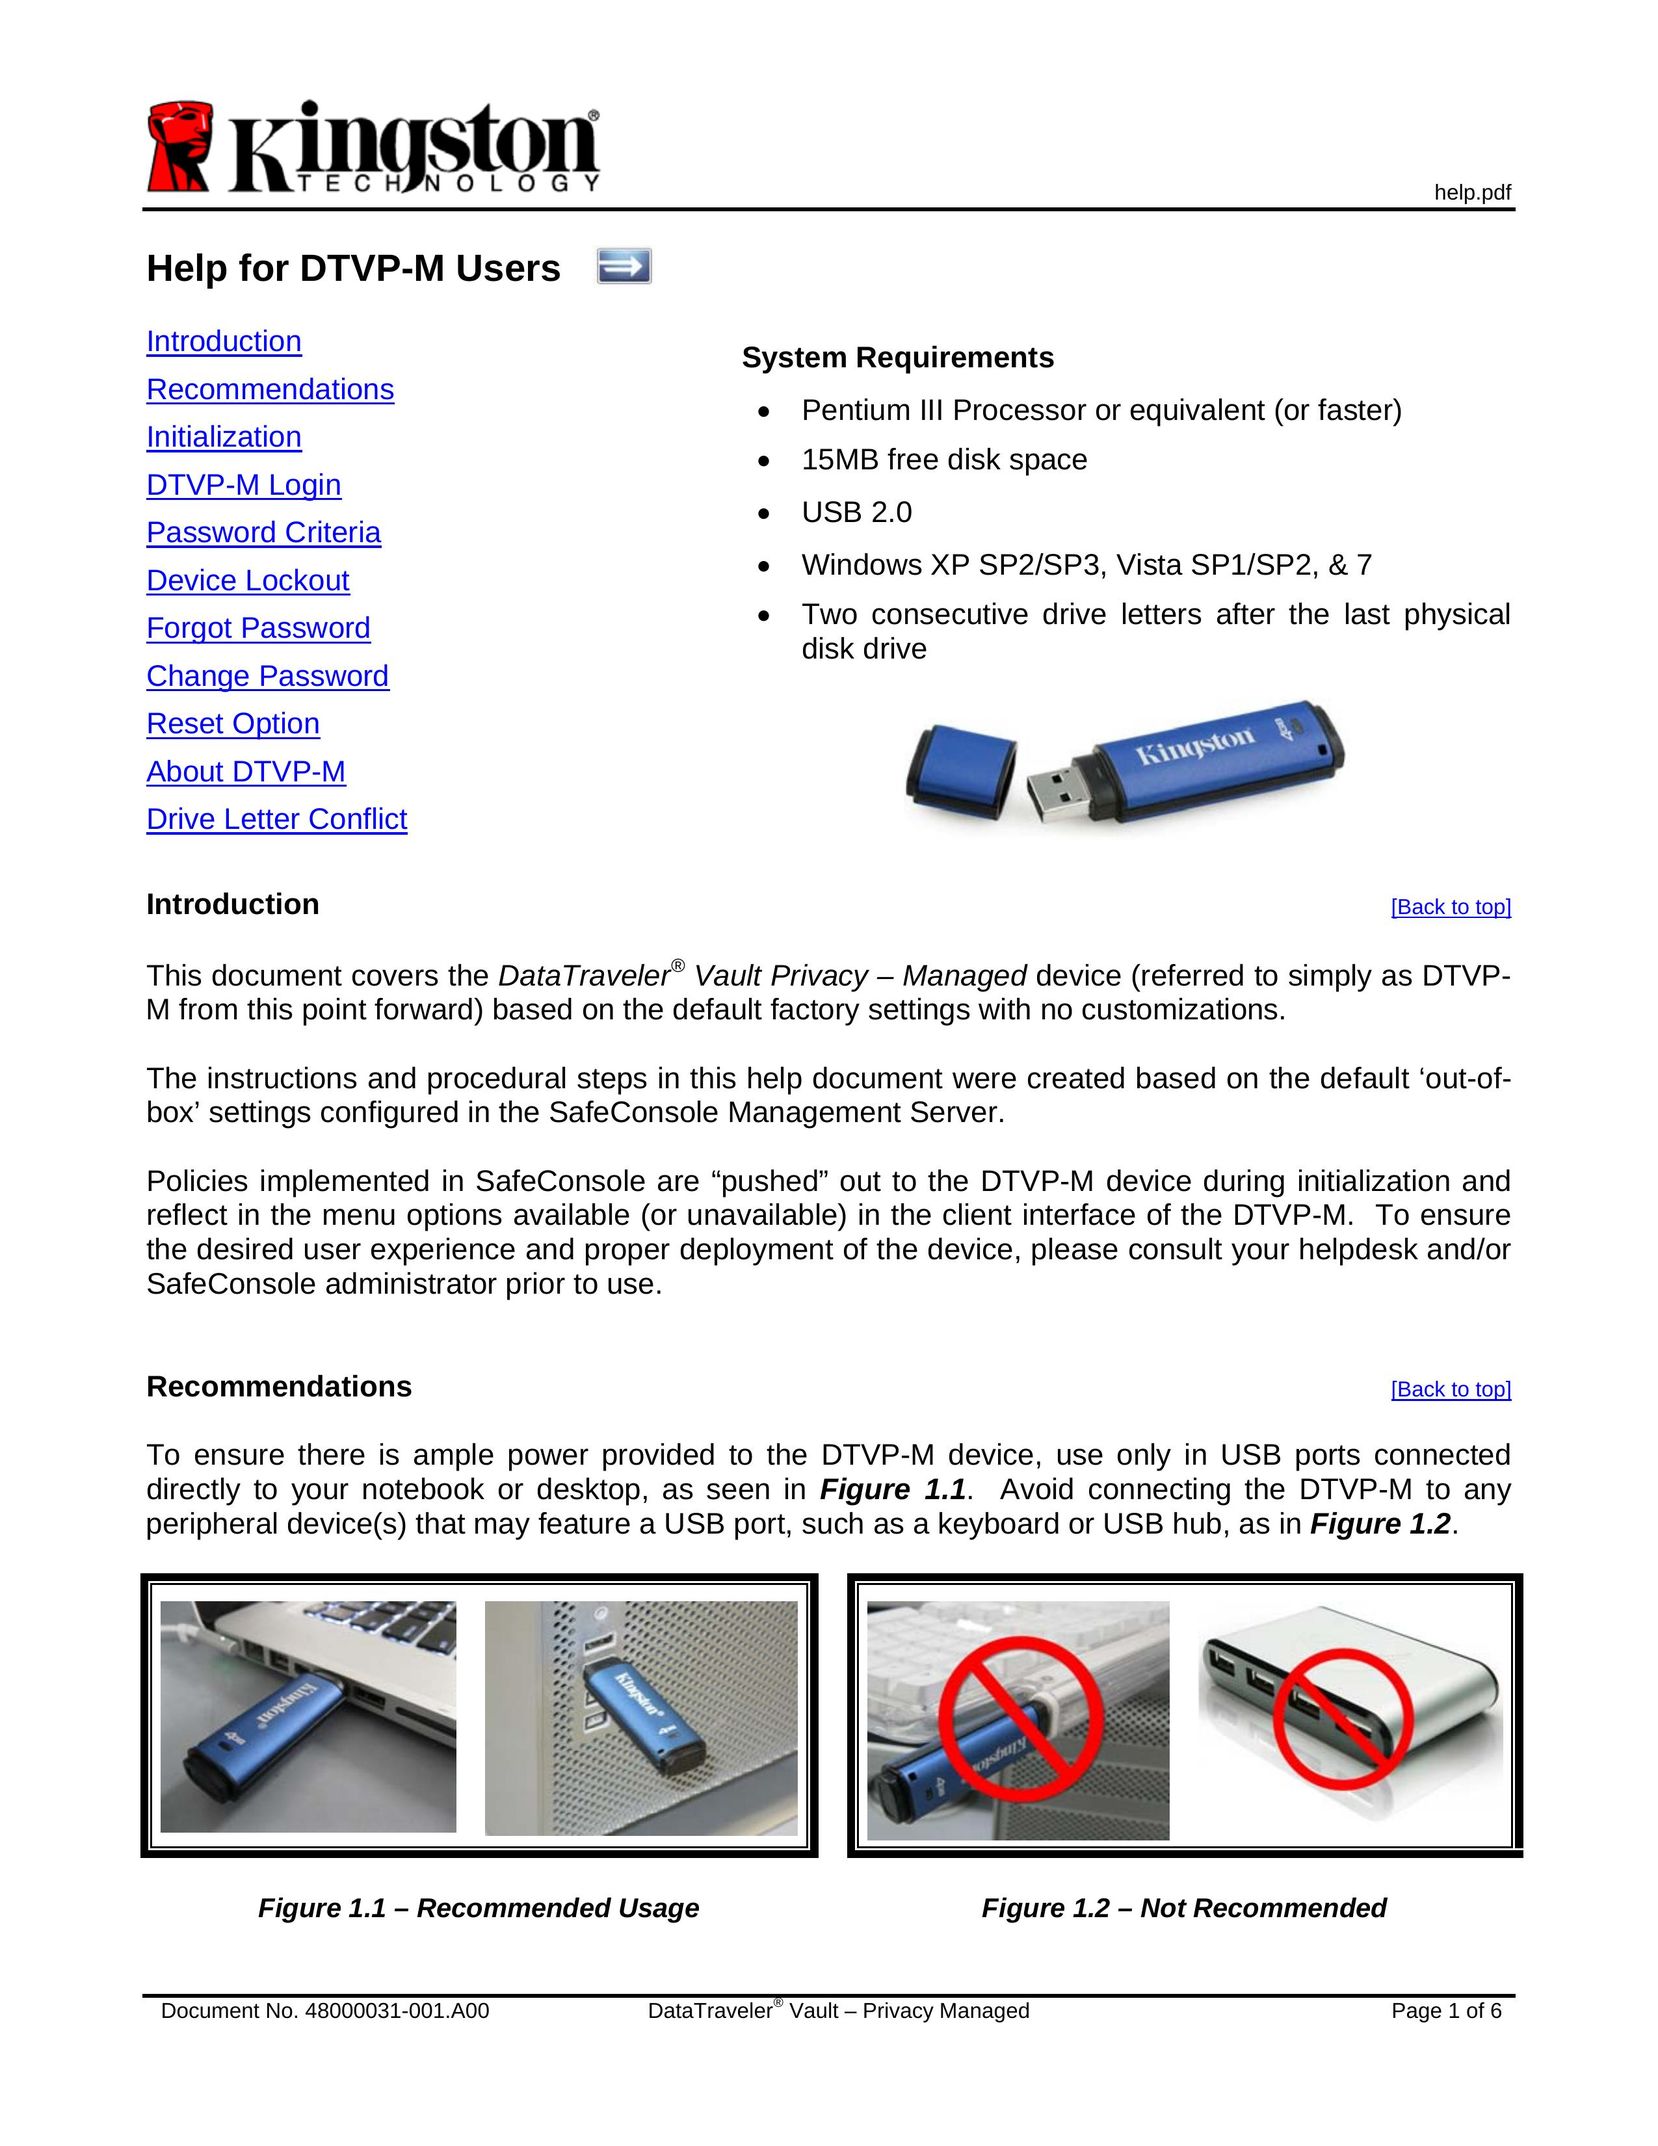 Kingston Technology DTPV-M Computer Drive User Manual